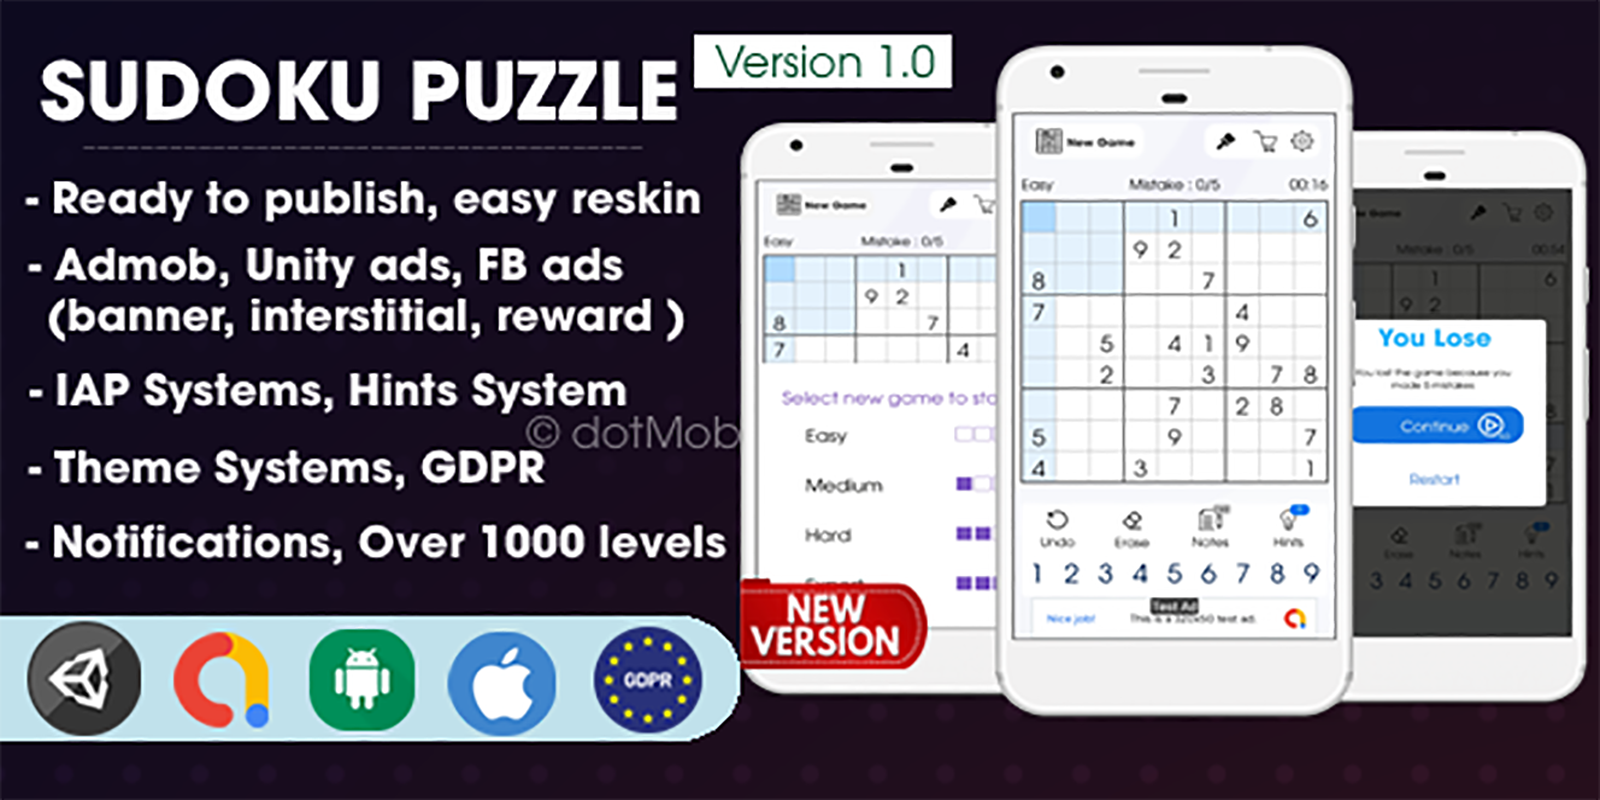 Sudoku Puzzle - Unity Template Project